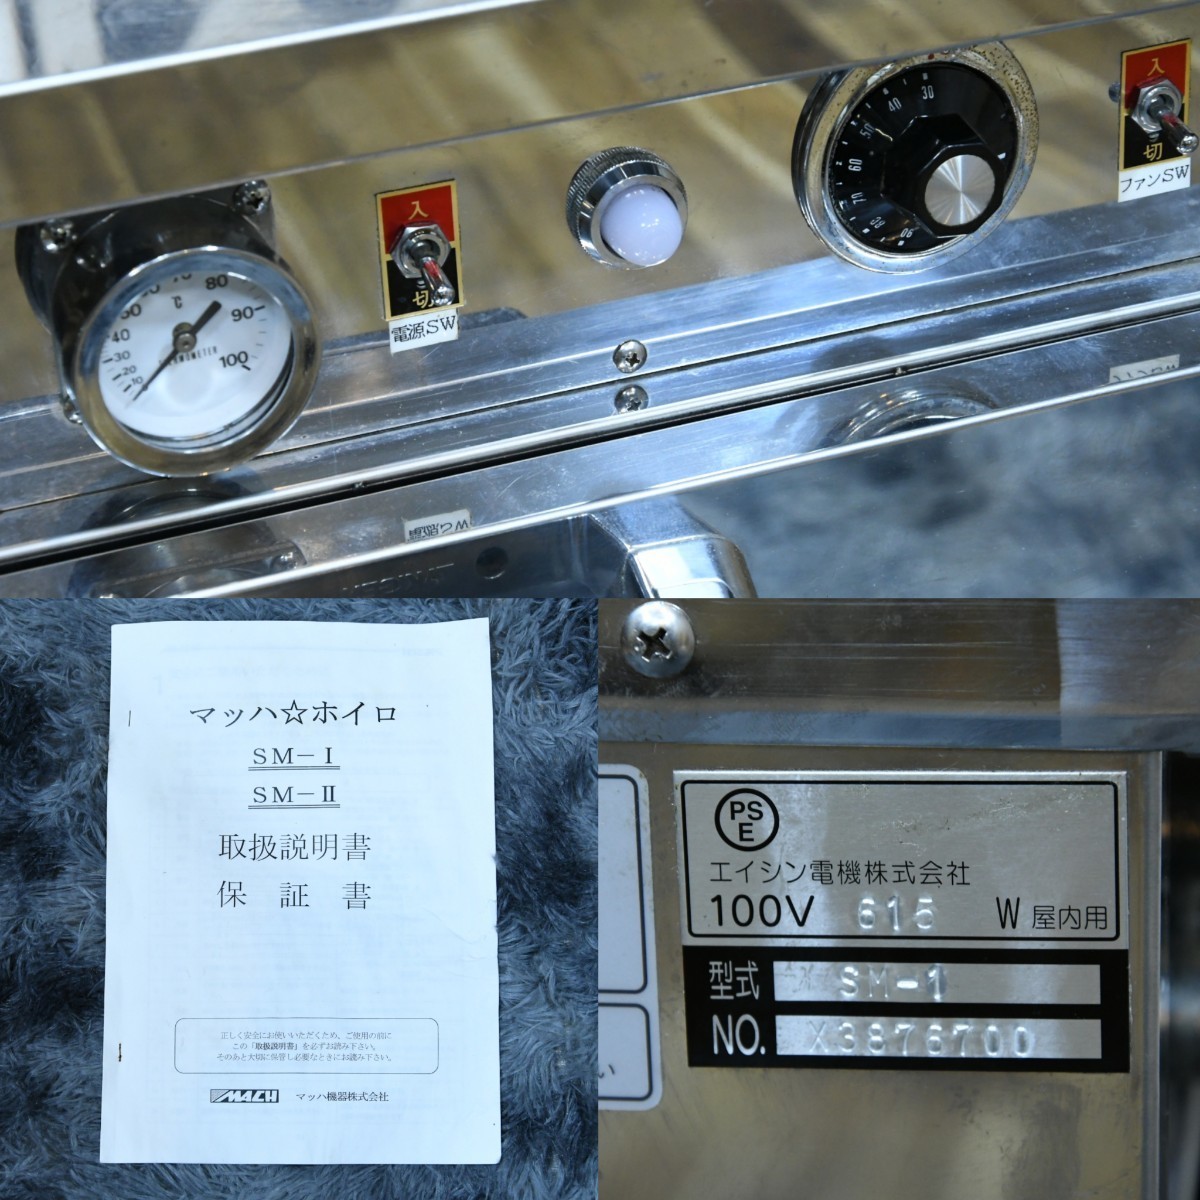 PL4BK96 マッハ機器 ベーカリー用ホイロ SM-I 7段棚 平網付き AC100V 厨房機器 業務用 _画像10